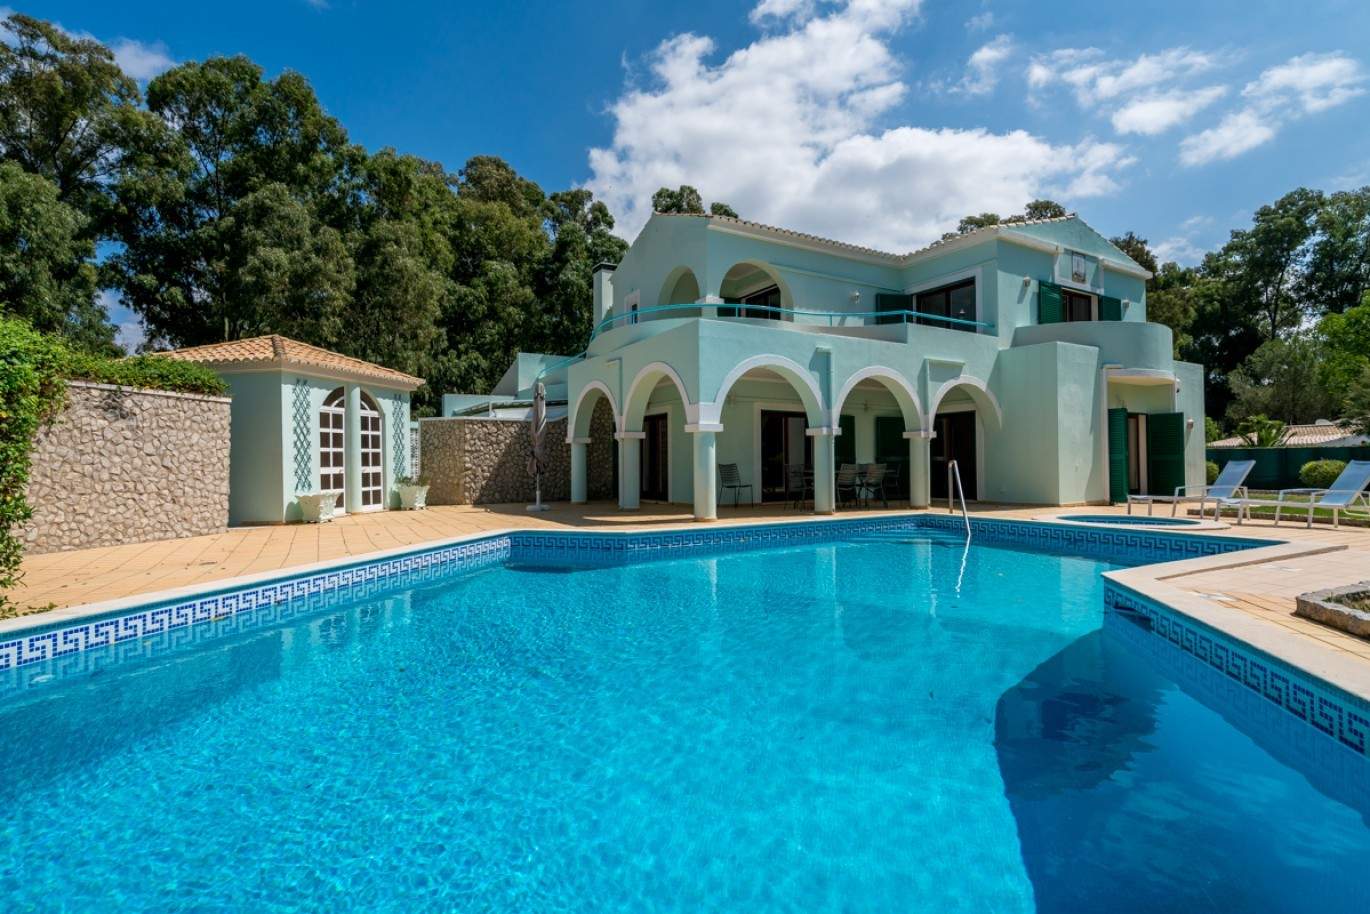 Sale of villa with garden and pool in Penina, Alvor, Algarve, Portugal_83422